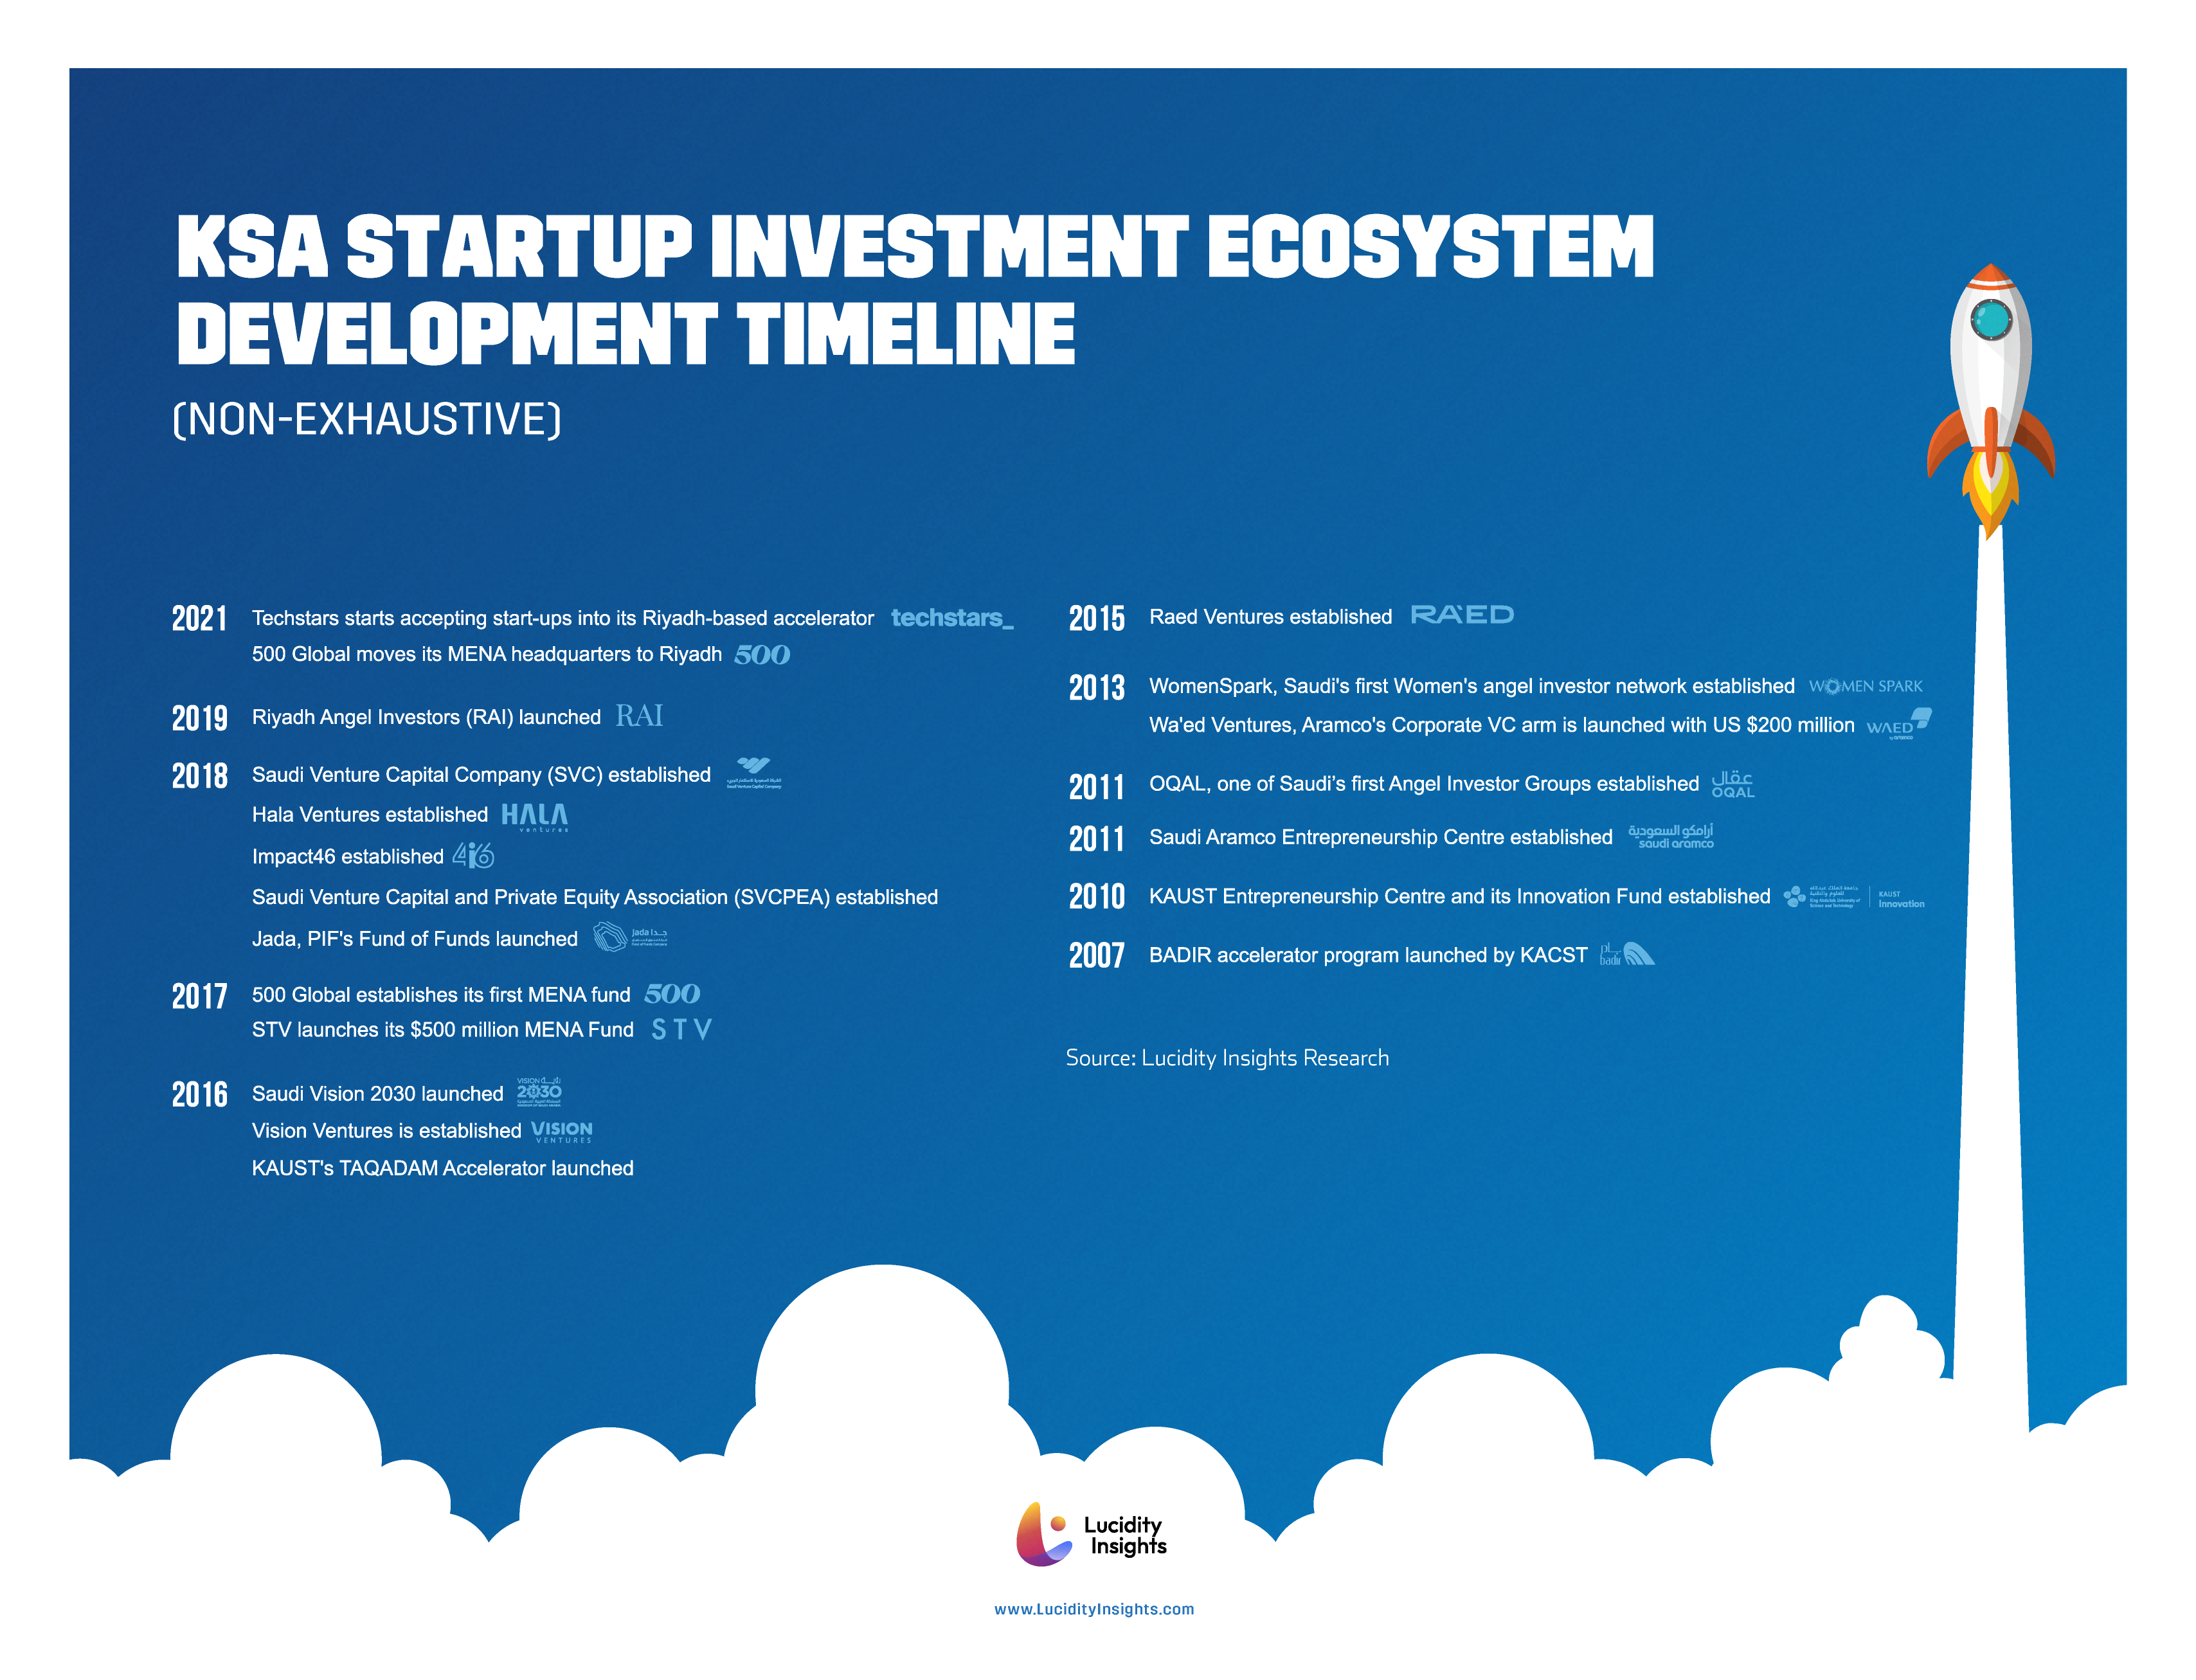 The Timeline of Saudi Arabia’s Startup Investment Ecosystem Development